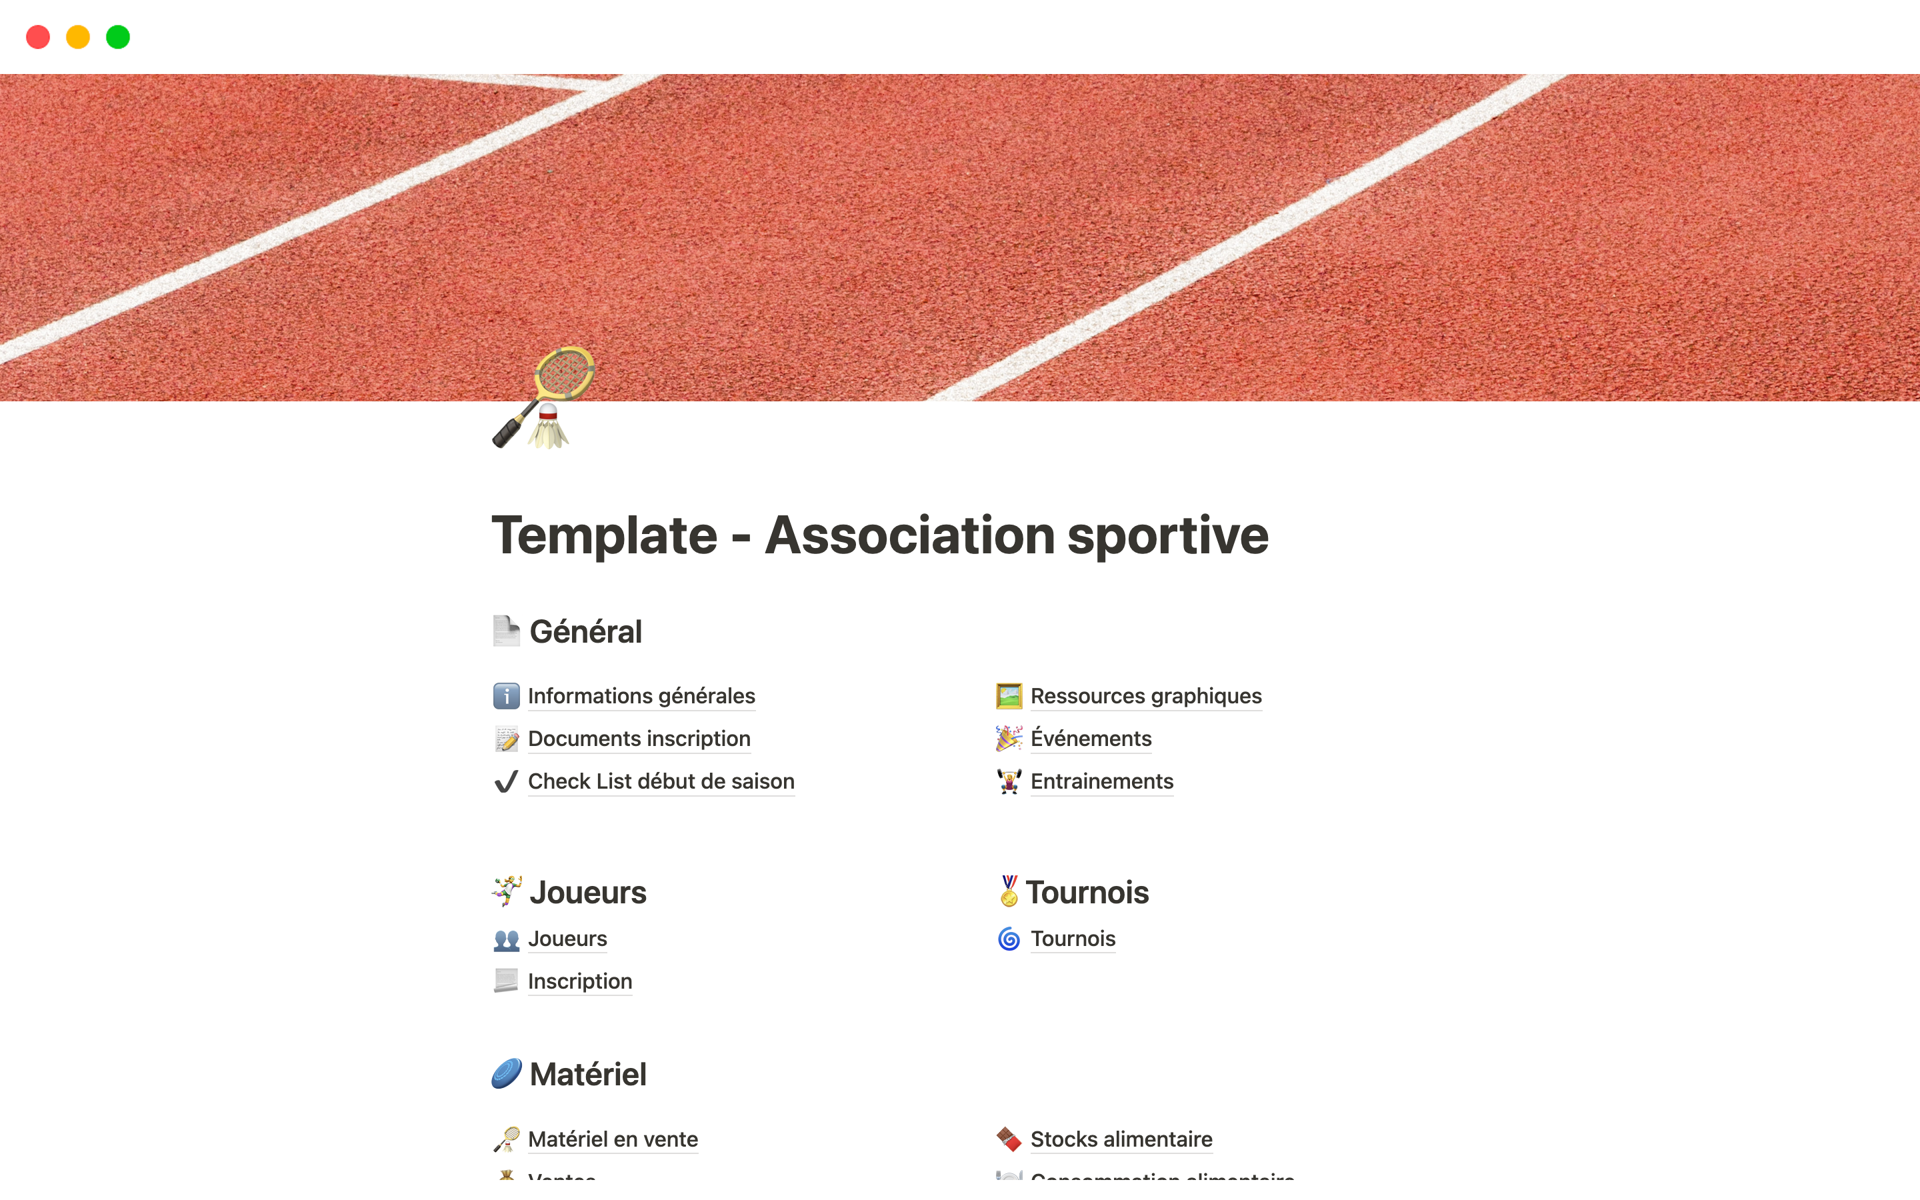 Vista previa de una plantilla para Template - Association sportive